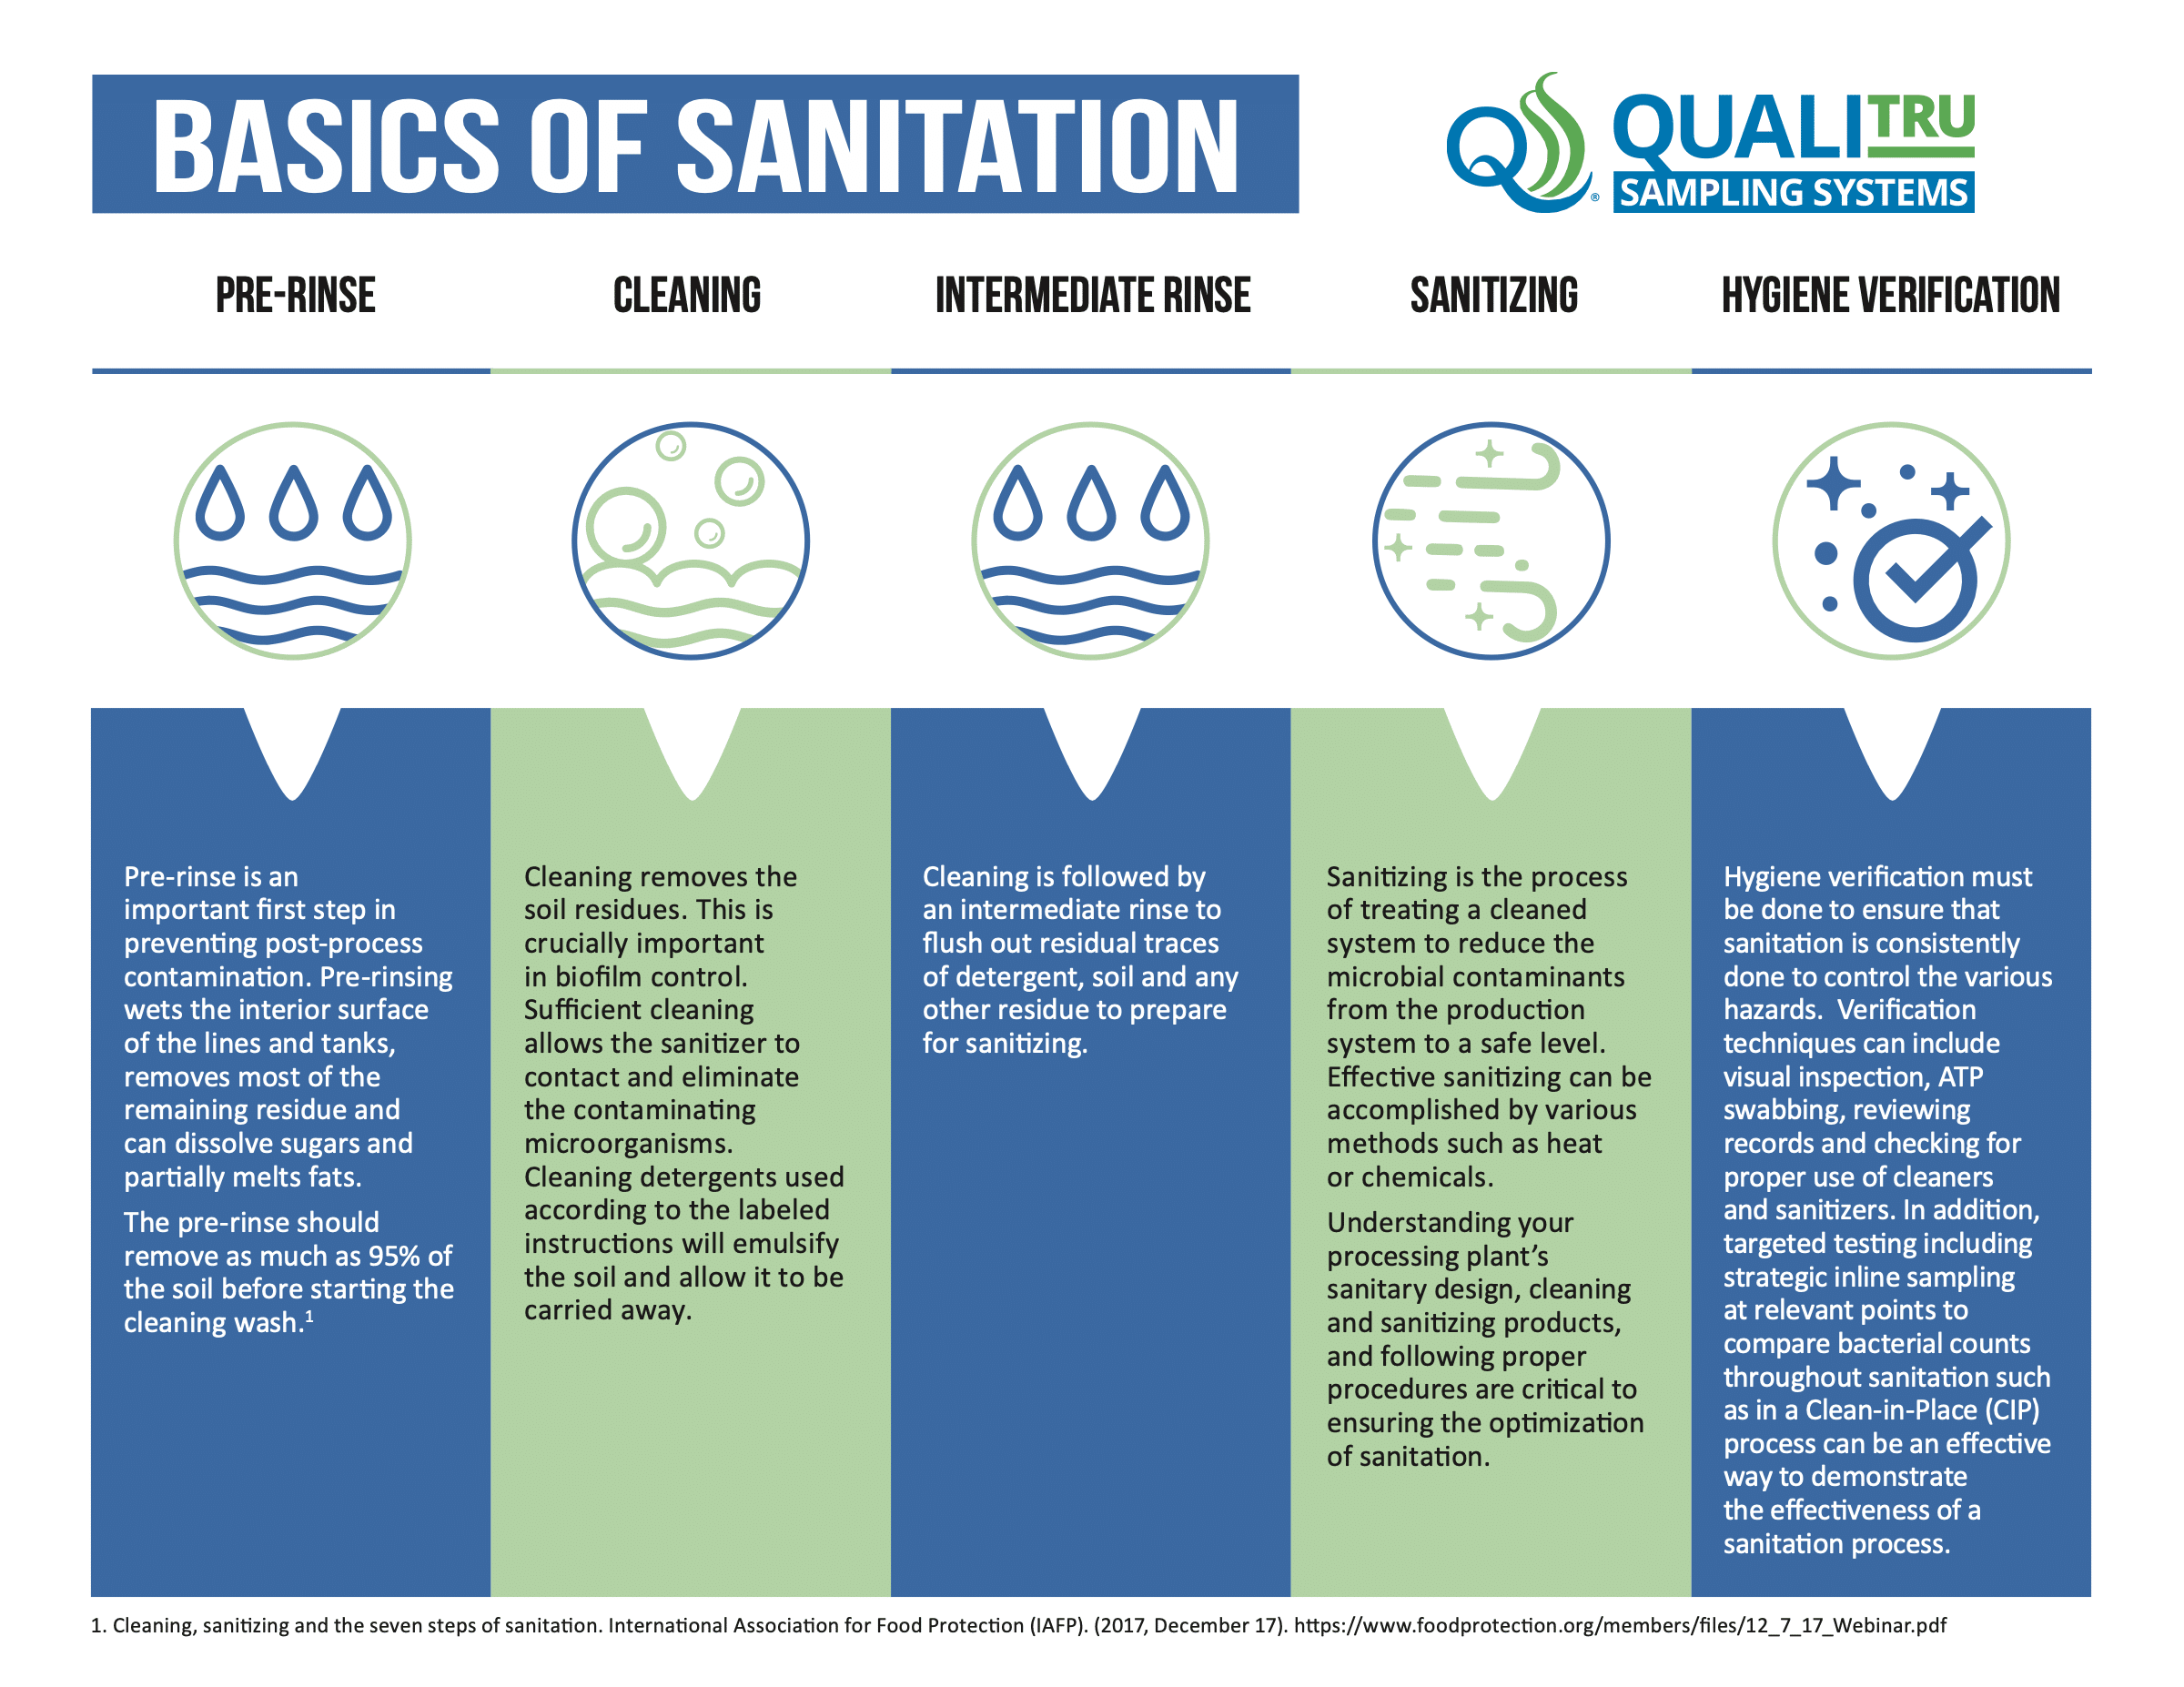 Basics of Sanitation for Preventing Post-Process Contamination